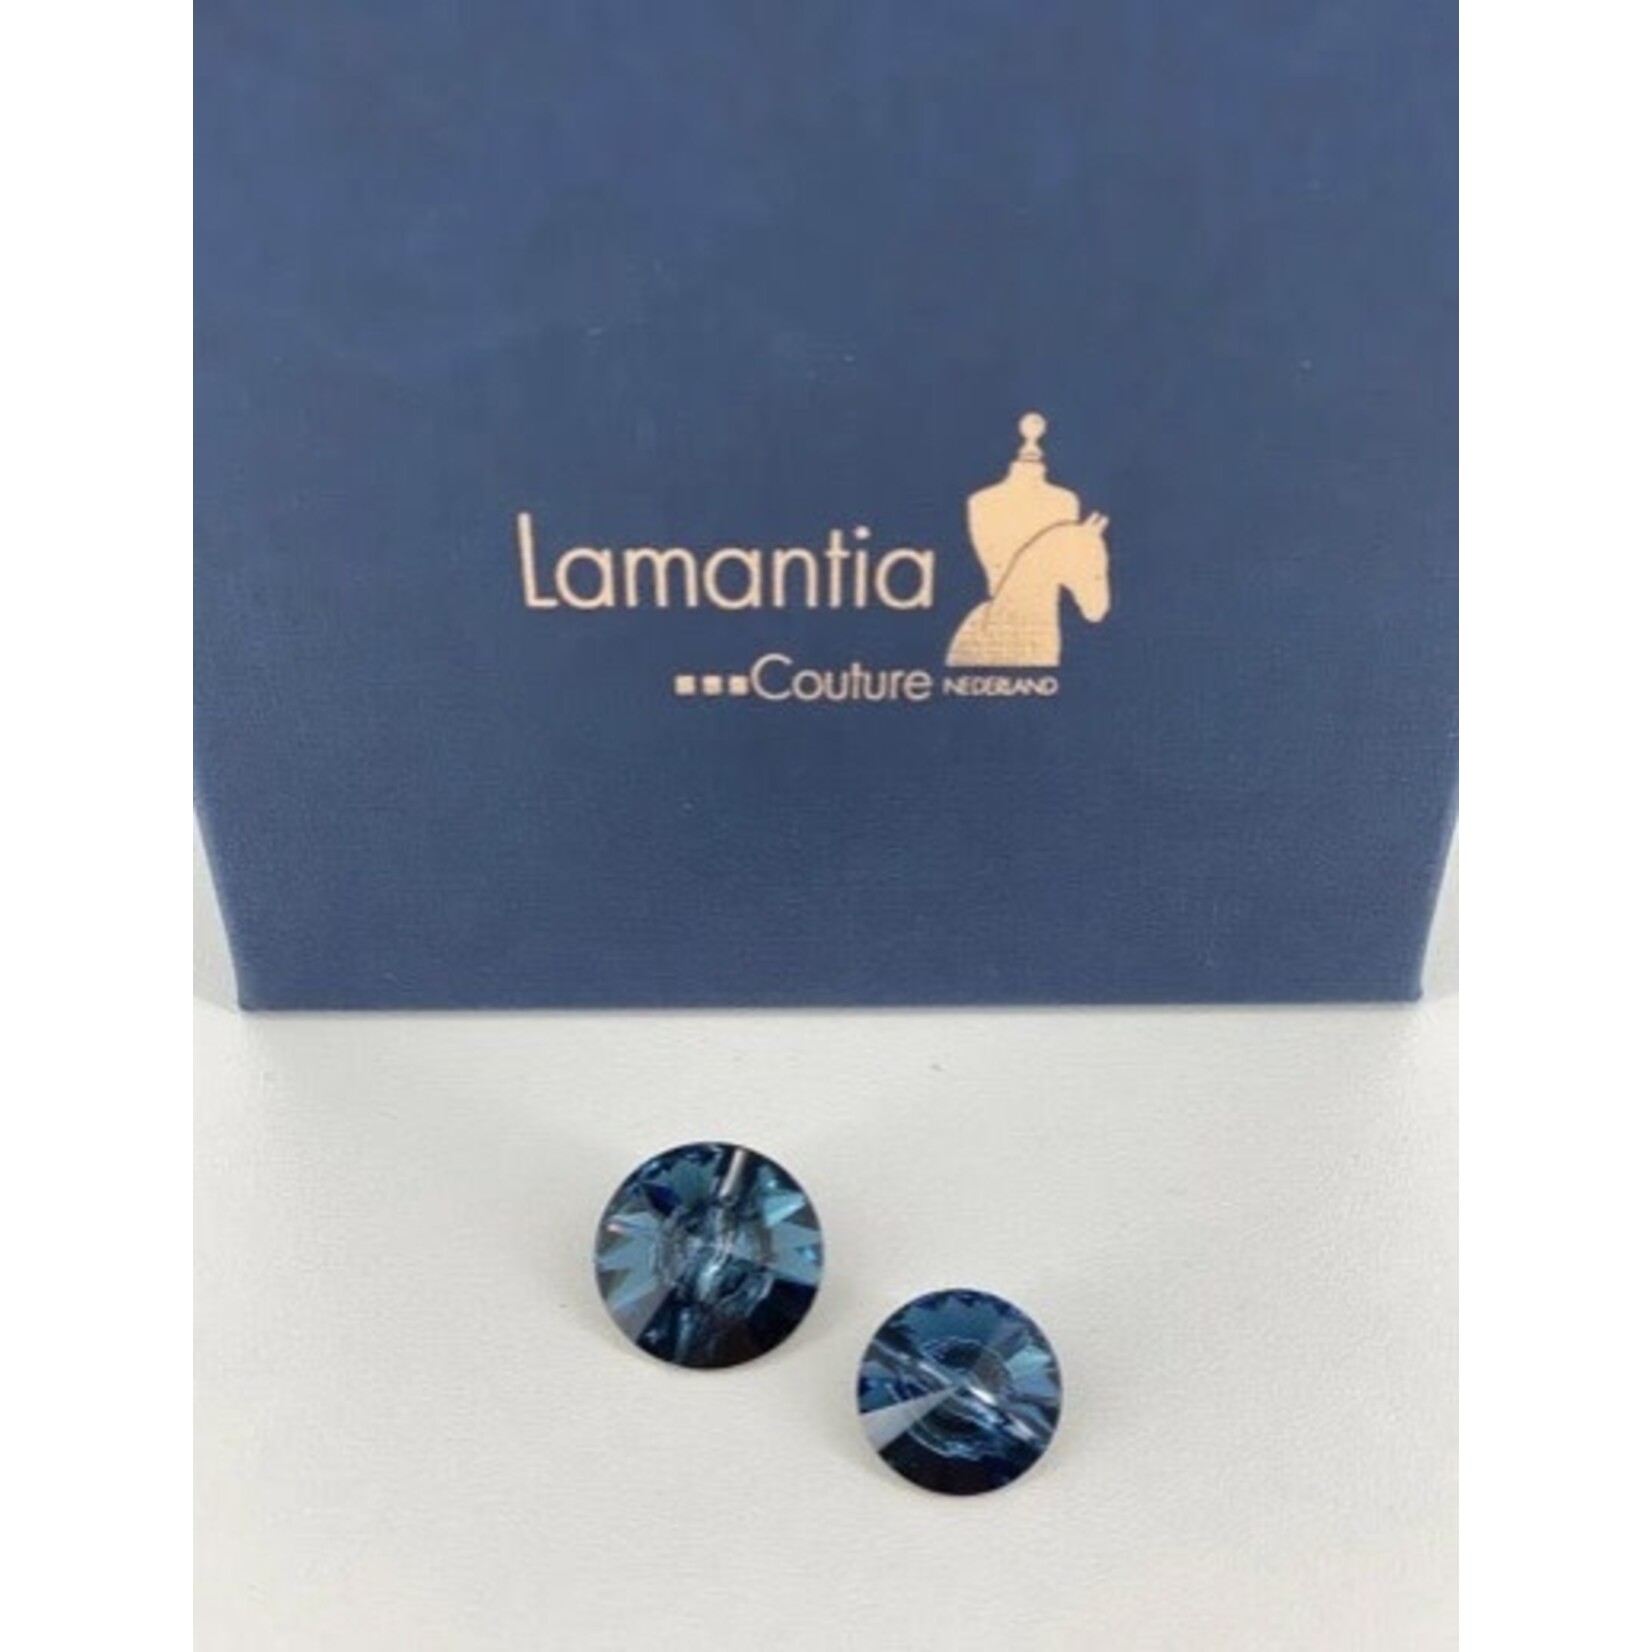 Lamantia Couture Nederland Swarovski button crystal montana big single with back 16mm